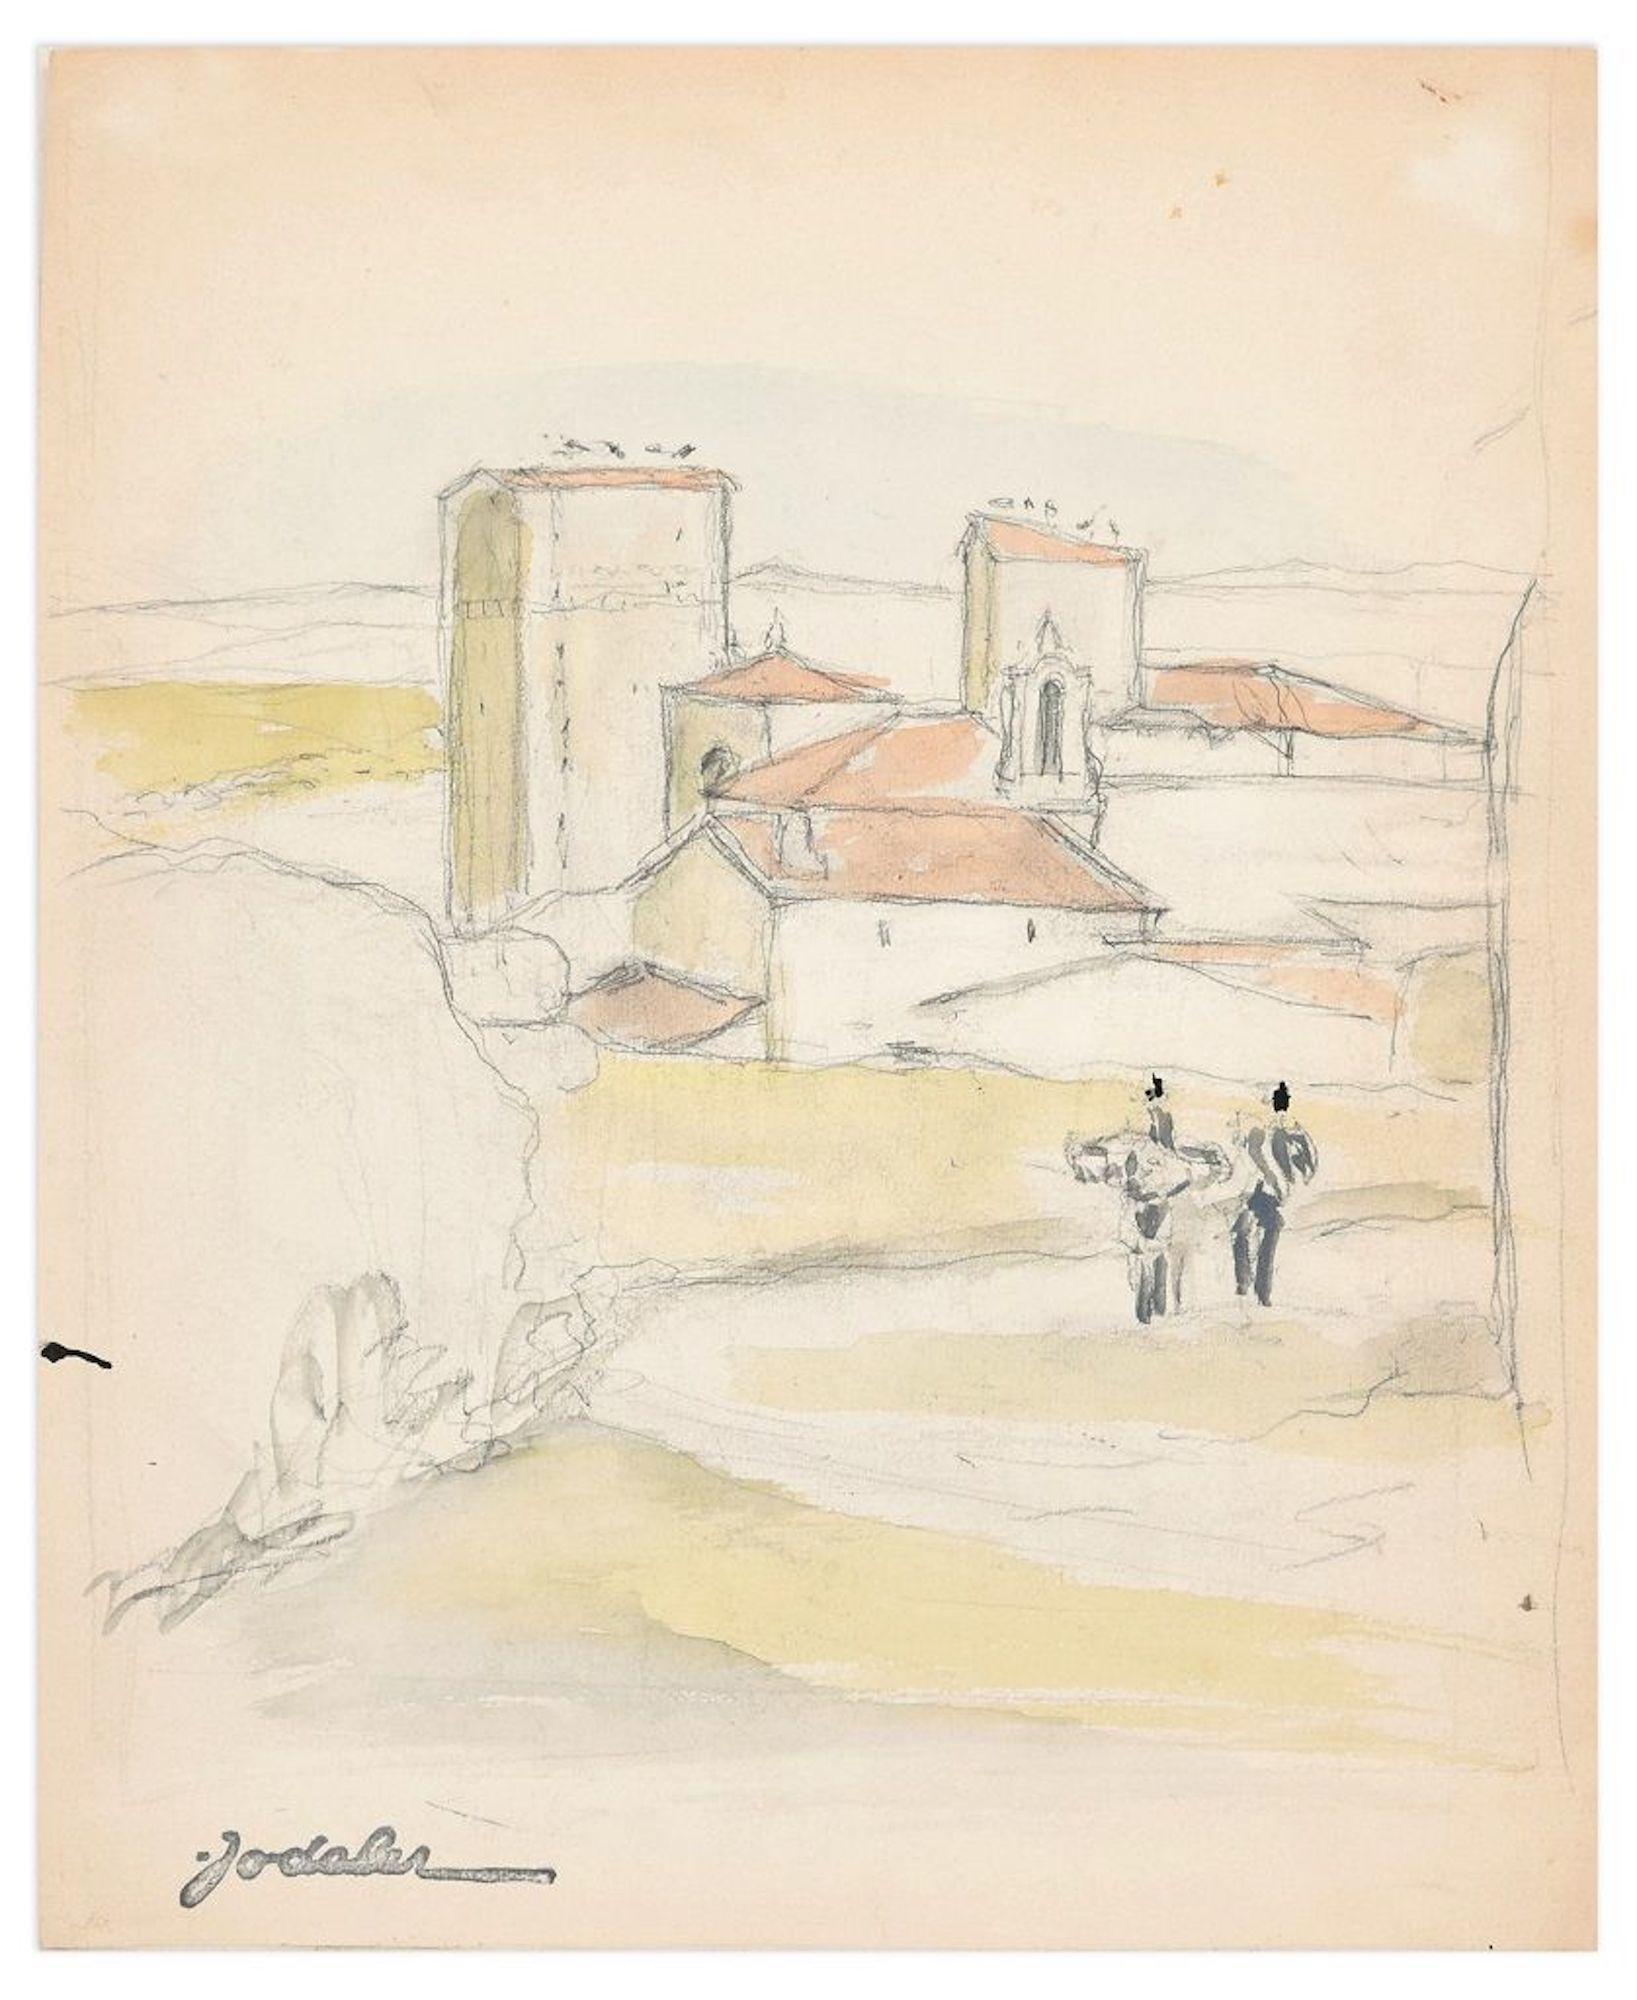 Landscape - Original Pencil and Watercolor by E.C. Jodelet - Mid 20th Century